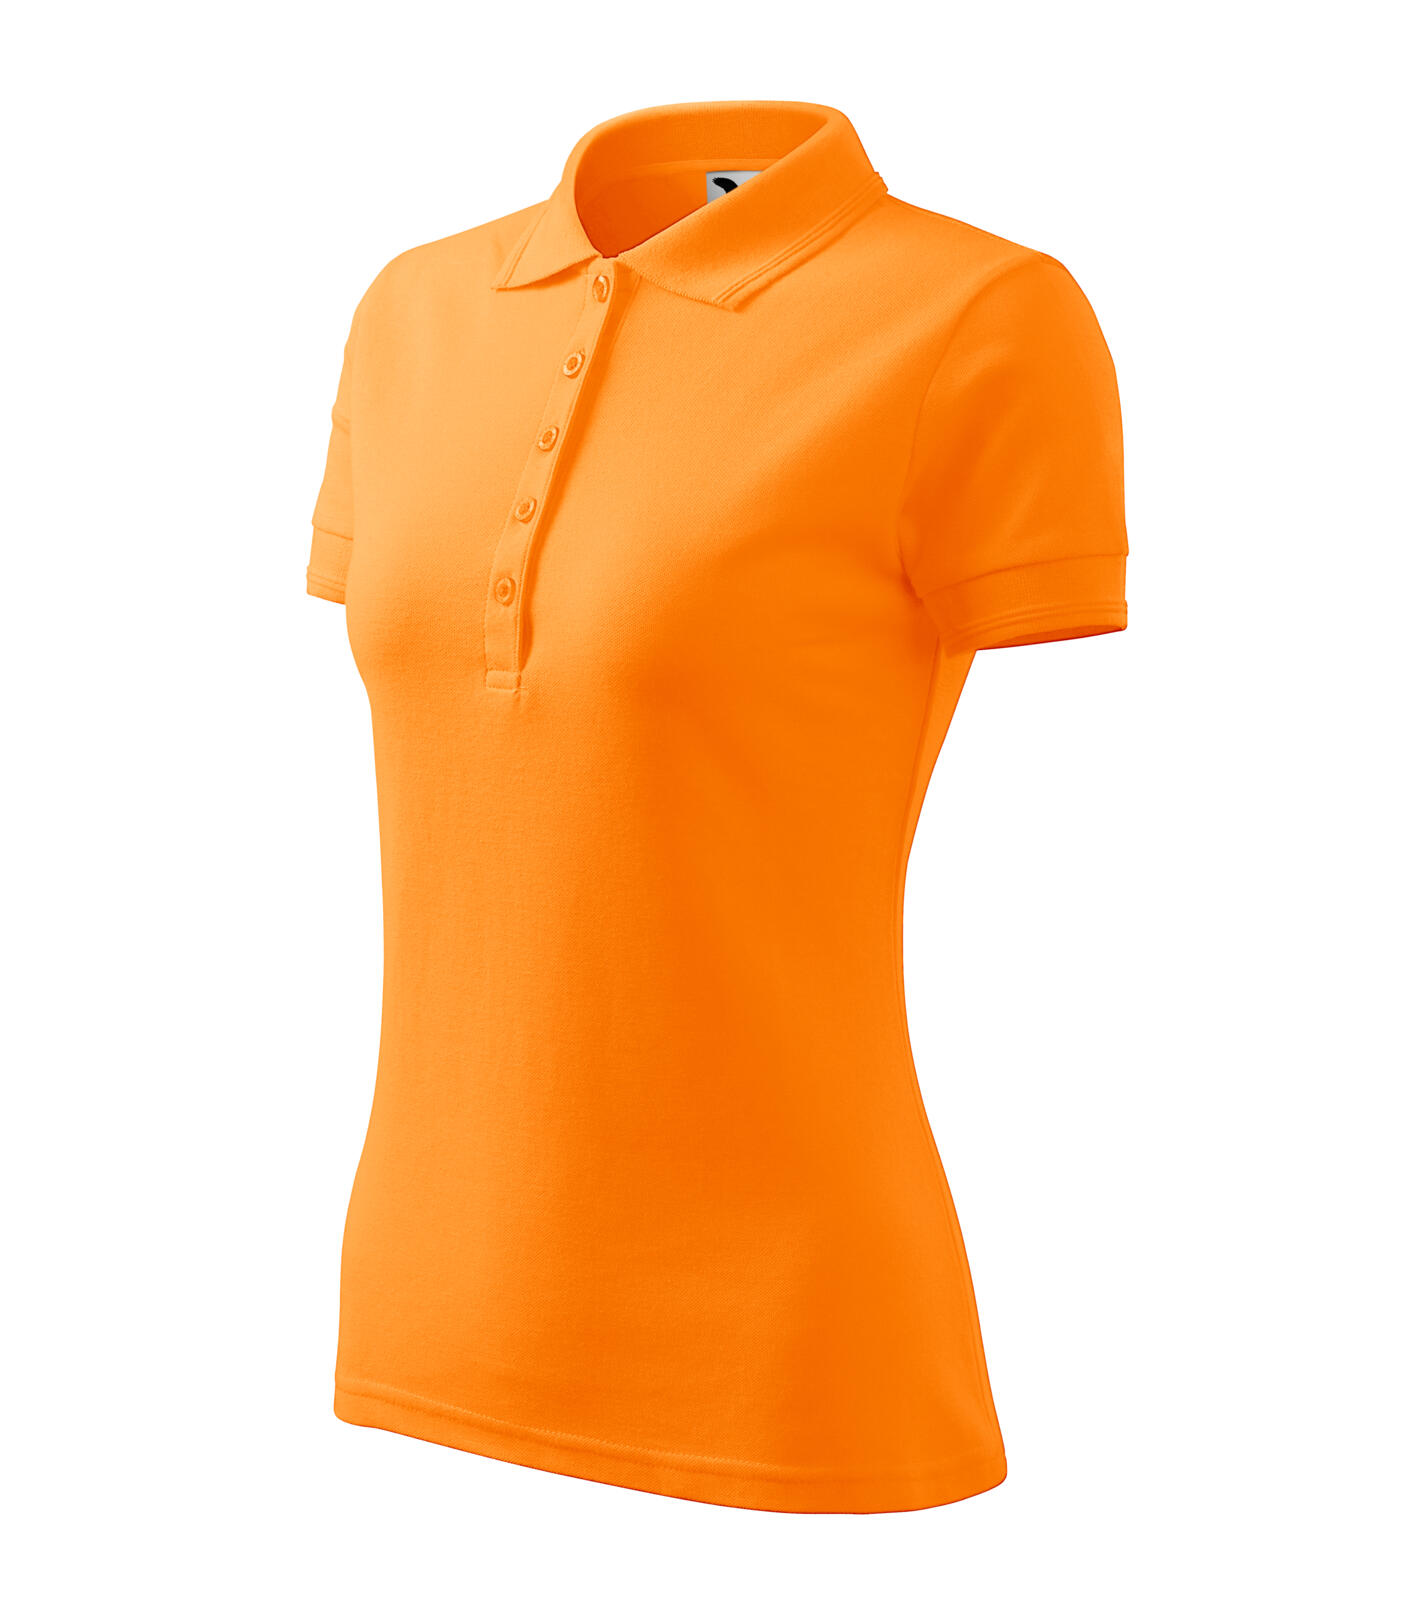 Pique Polo Polokošile dámská Barva: tangerine orange, Velikost: 2XL